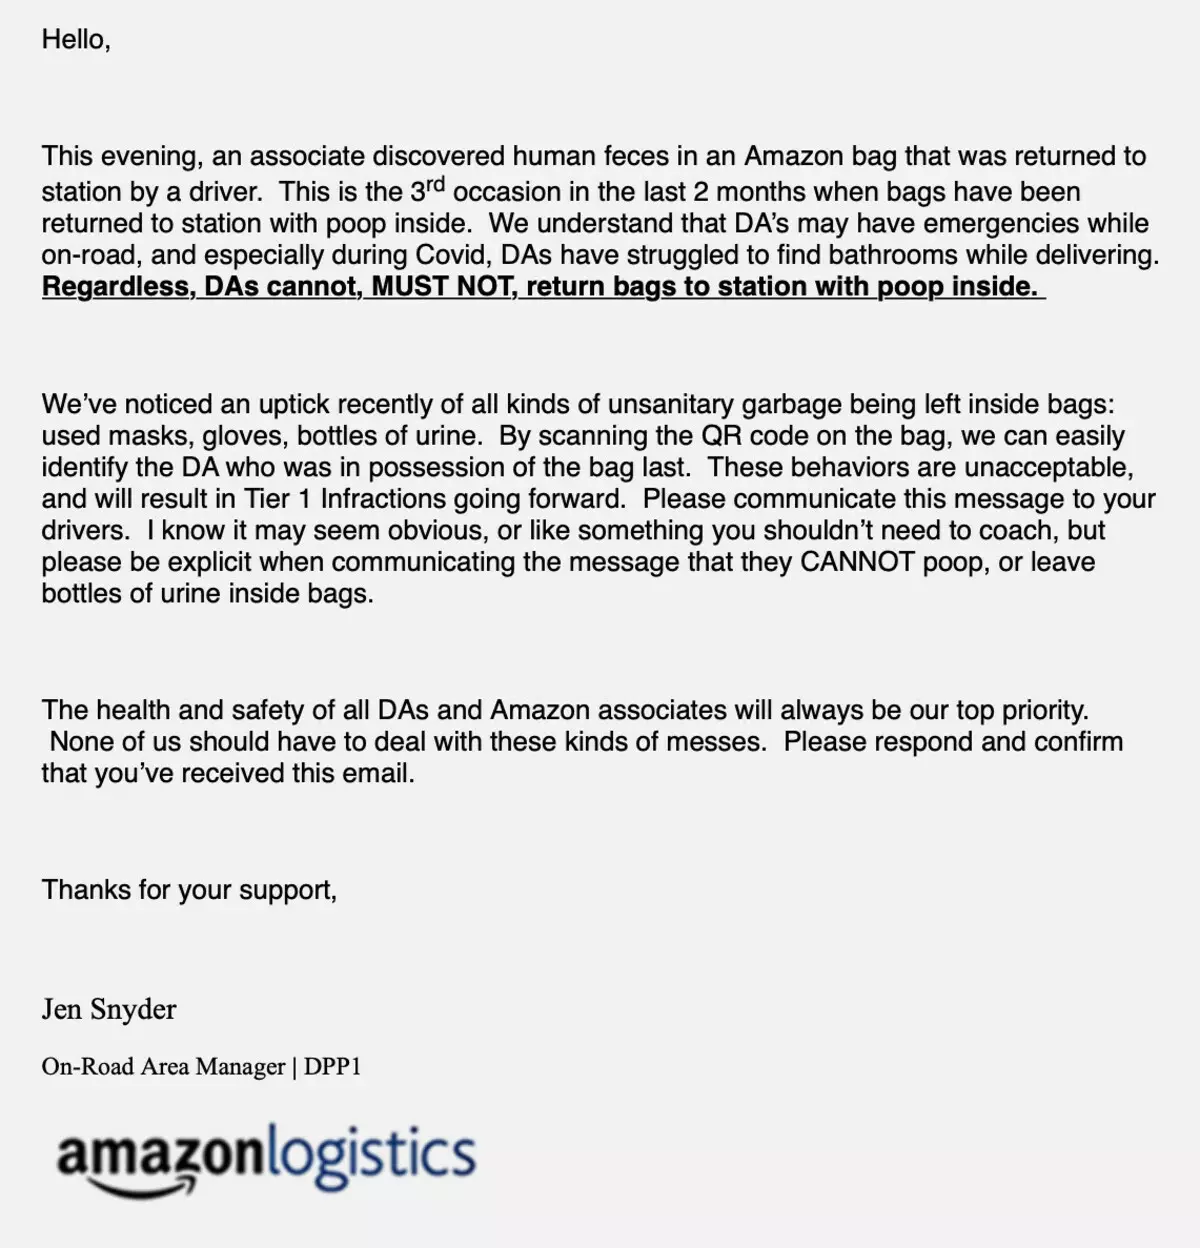 Amazon Delivers는 "비인간적"조건에 대해 불평하고 병에 소변을 주어야합니다. 이 회사는 이것을 부인합니다